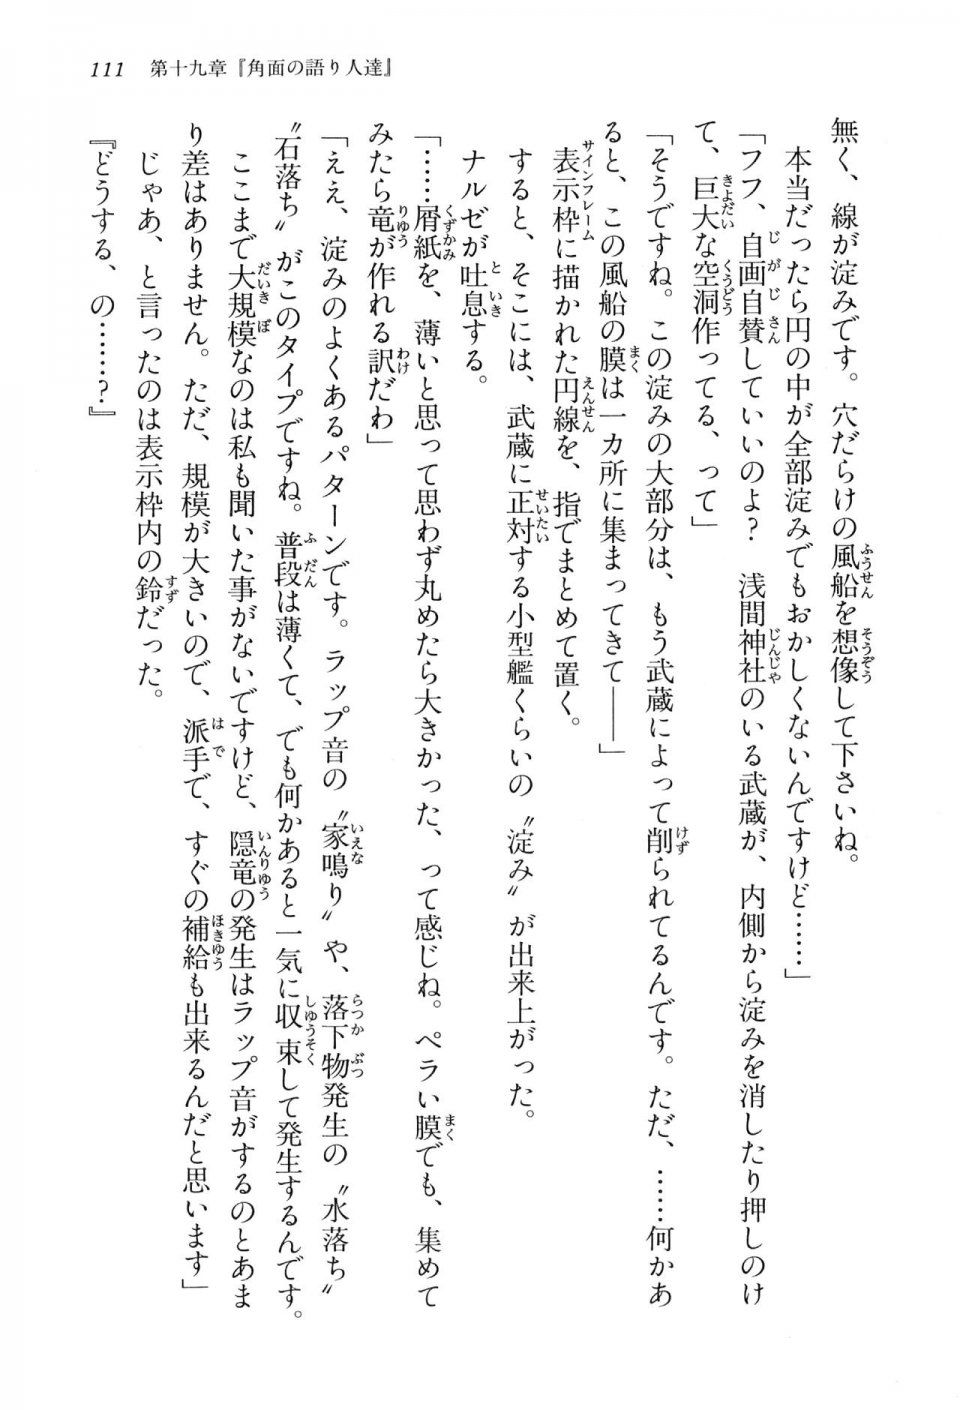 Kyoukai Senjou no Horizon BD Special Mininovel Vol 4(2B) - Photo #115